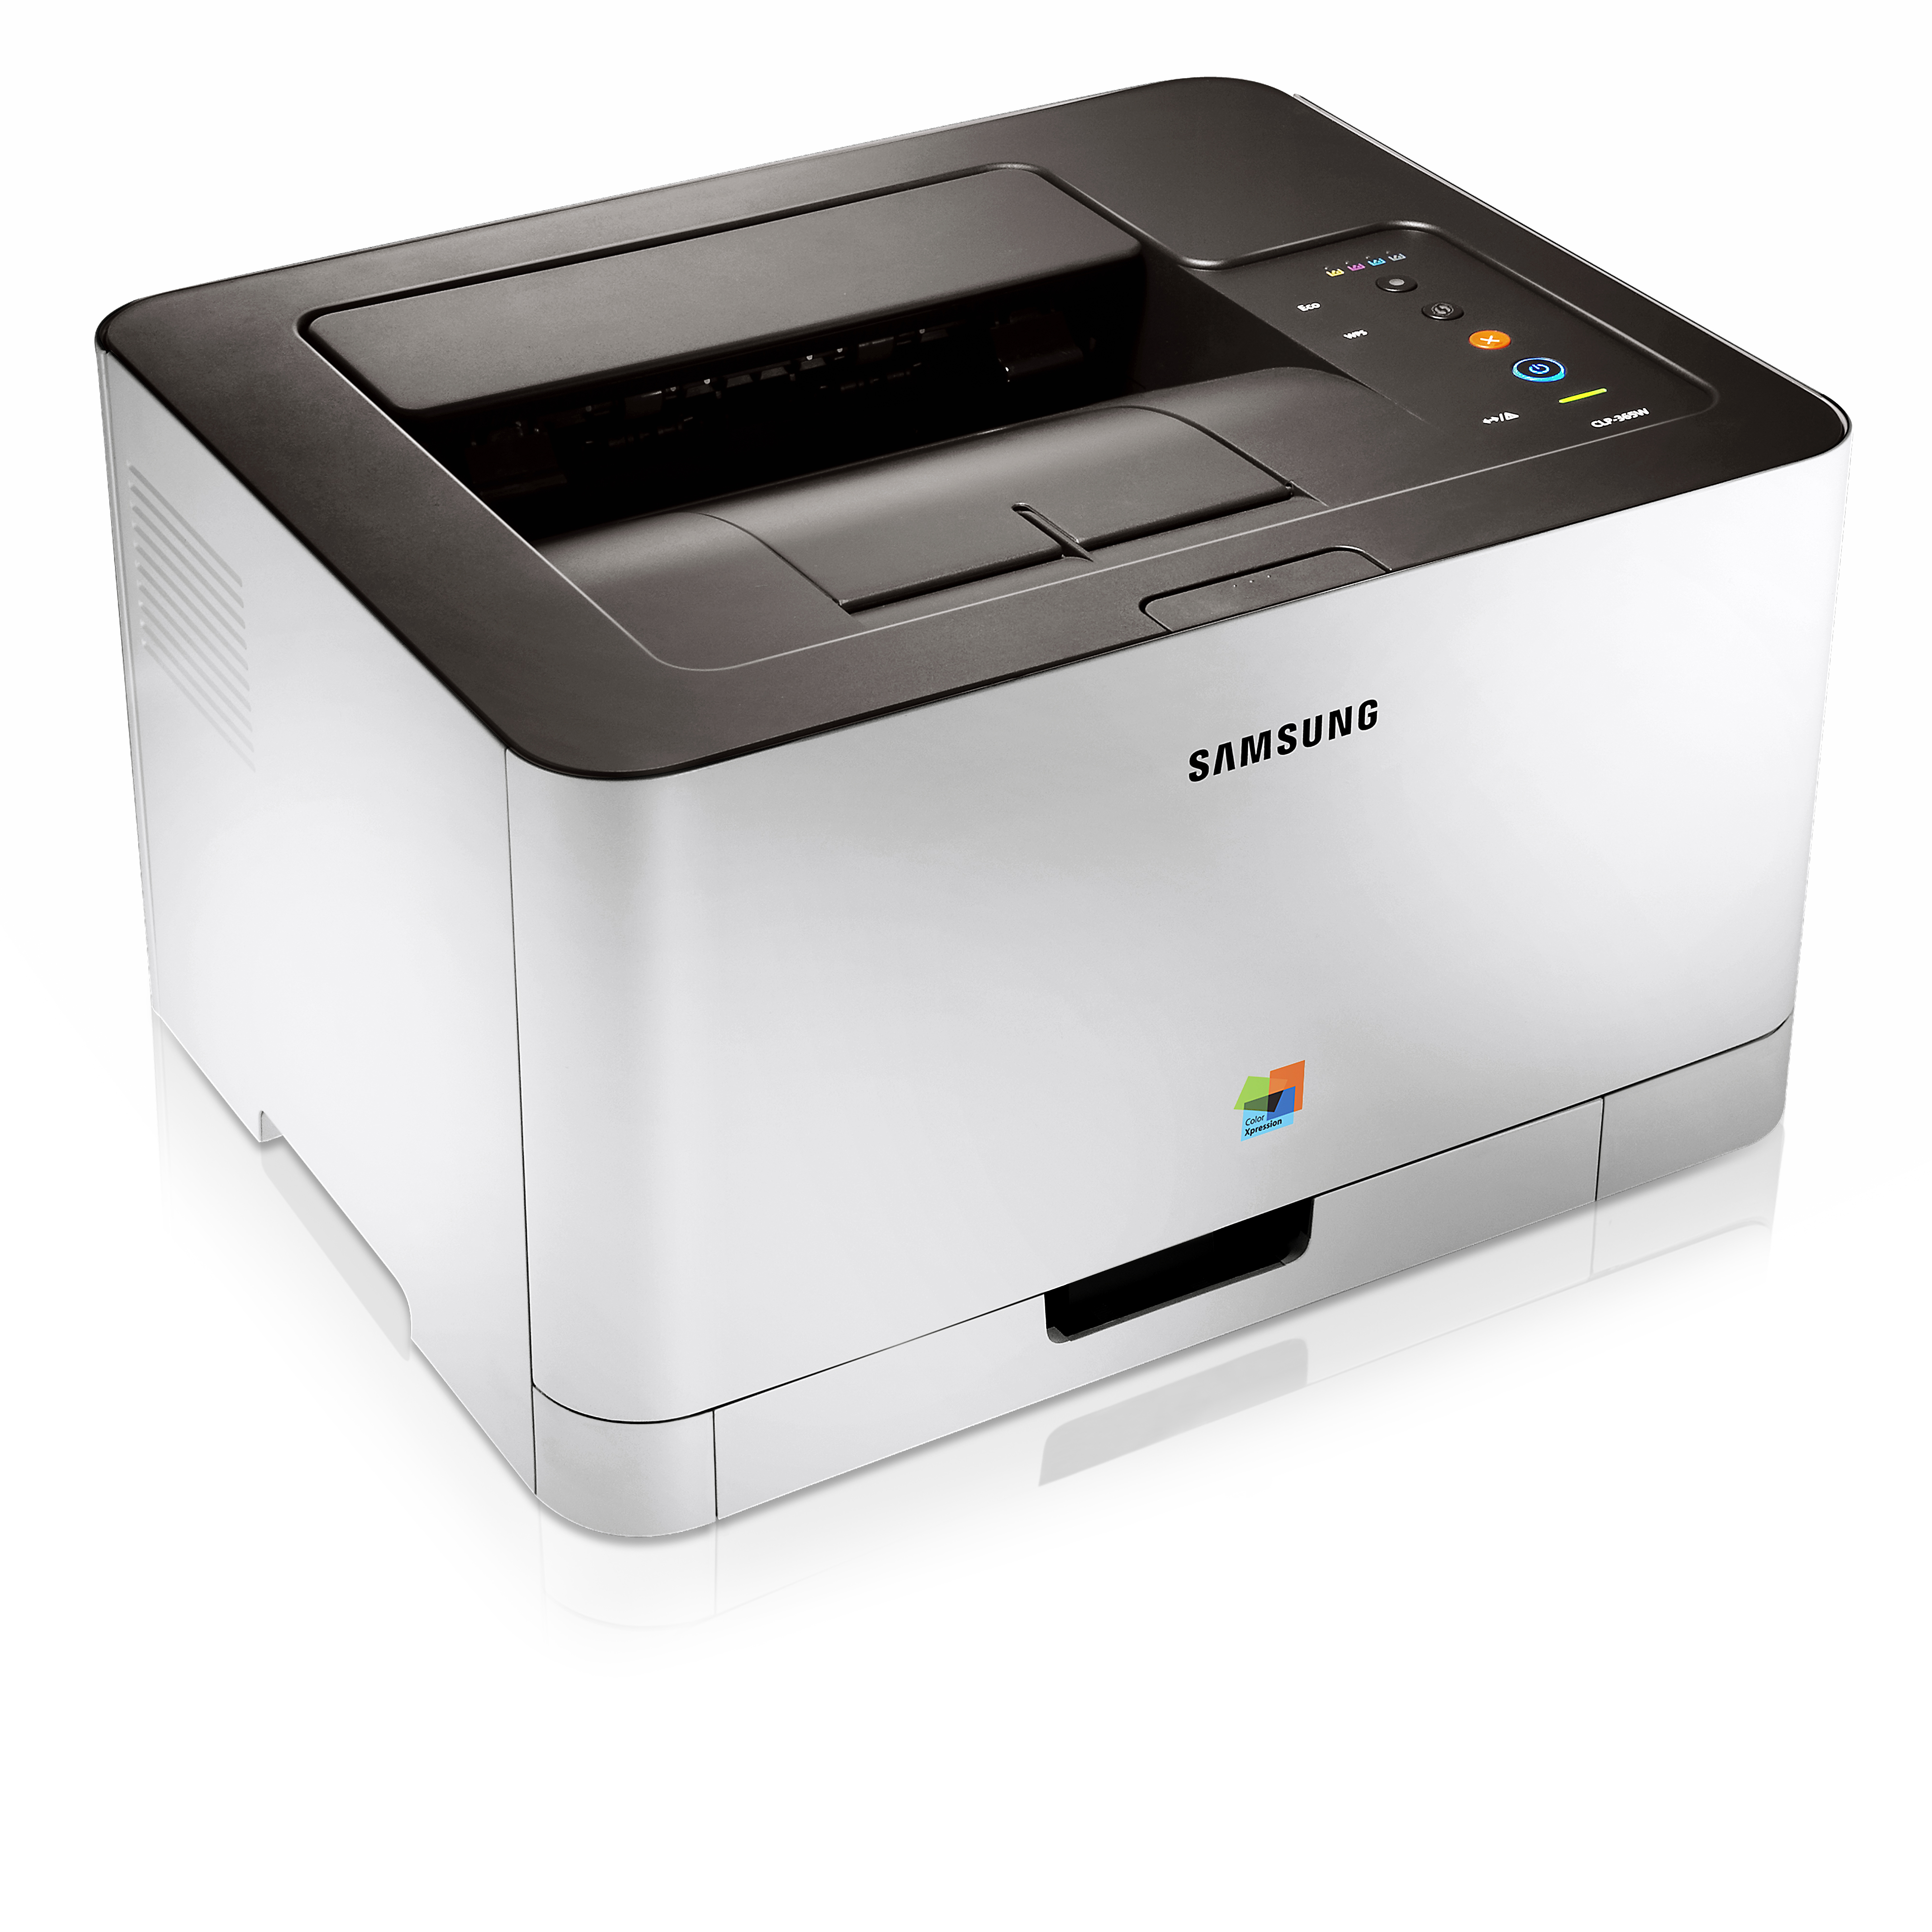 compact a4 printer